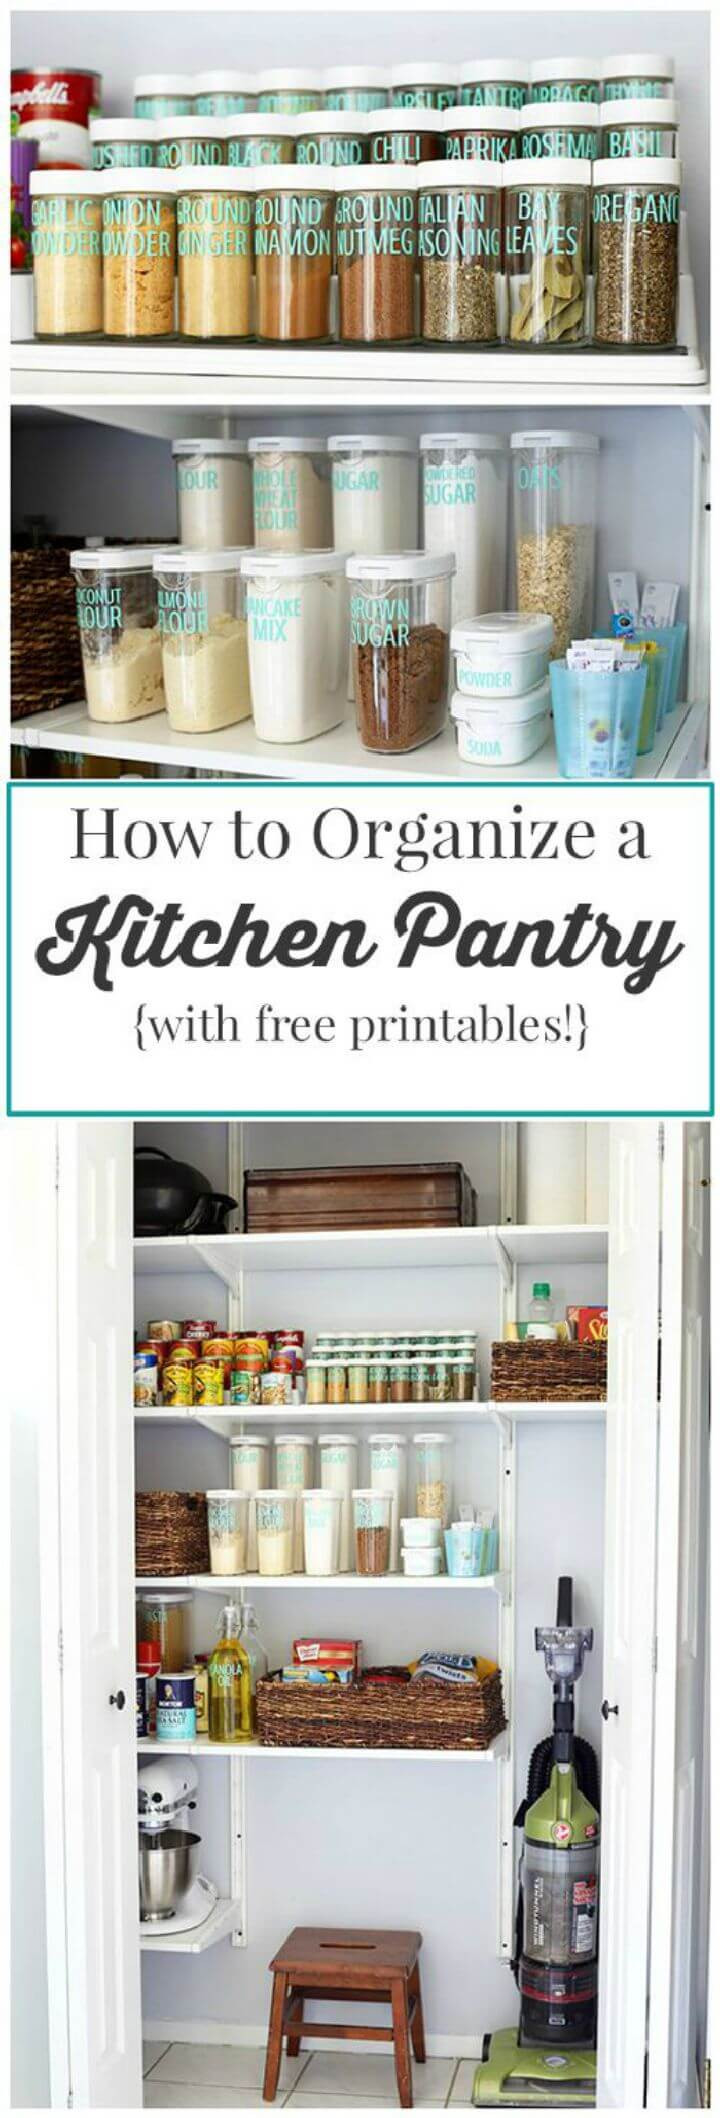 DIY Pantry Organization
 60 Best Pantry Organization Ideas DIY Page 3 of 12